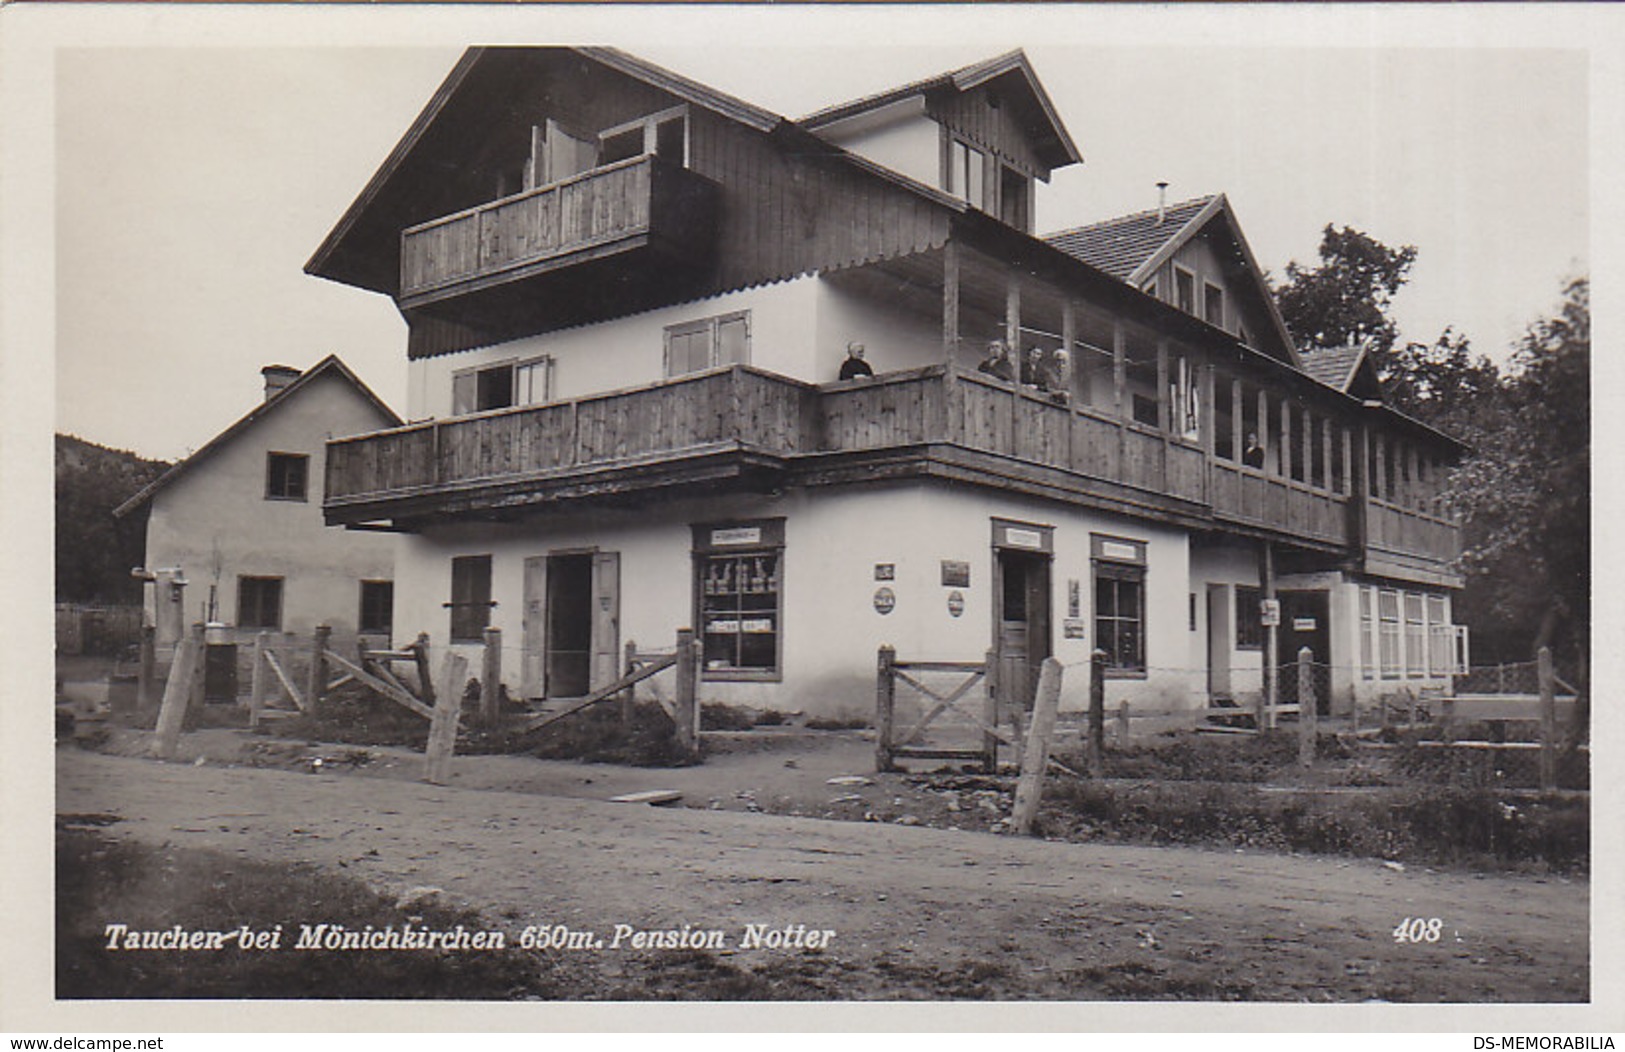 Tauchen Bei Monichkirchen - Pension Notter - Neunkirchen